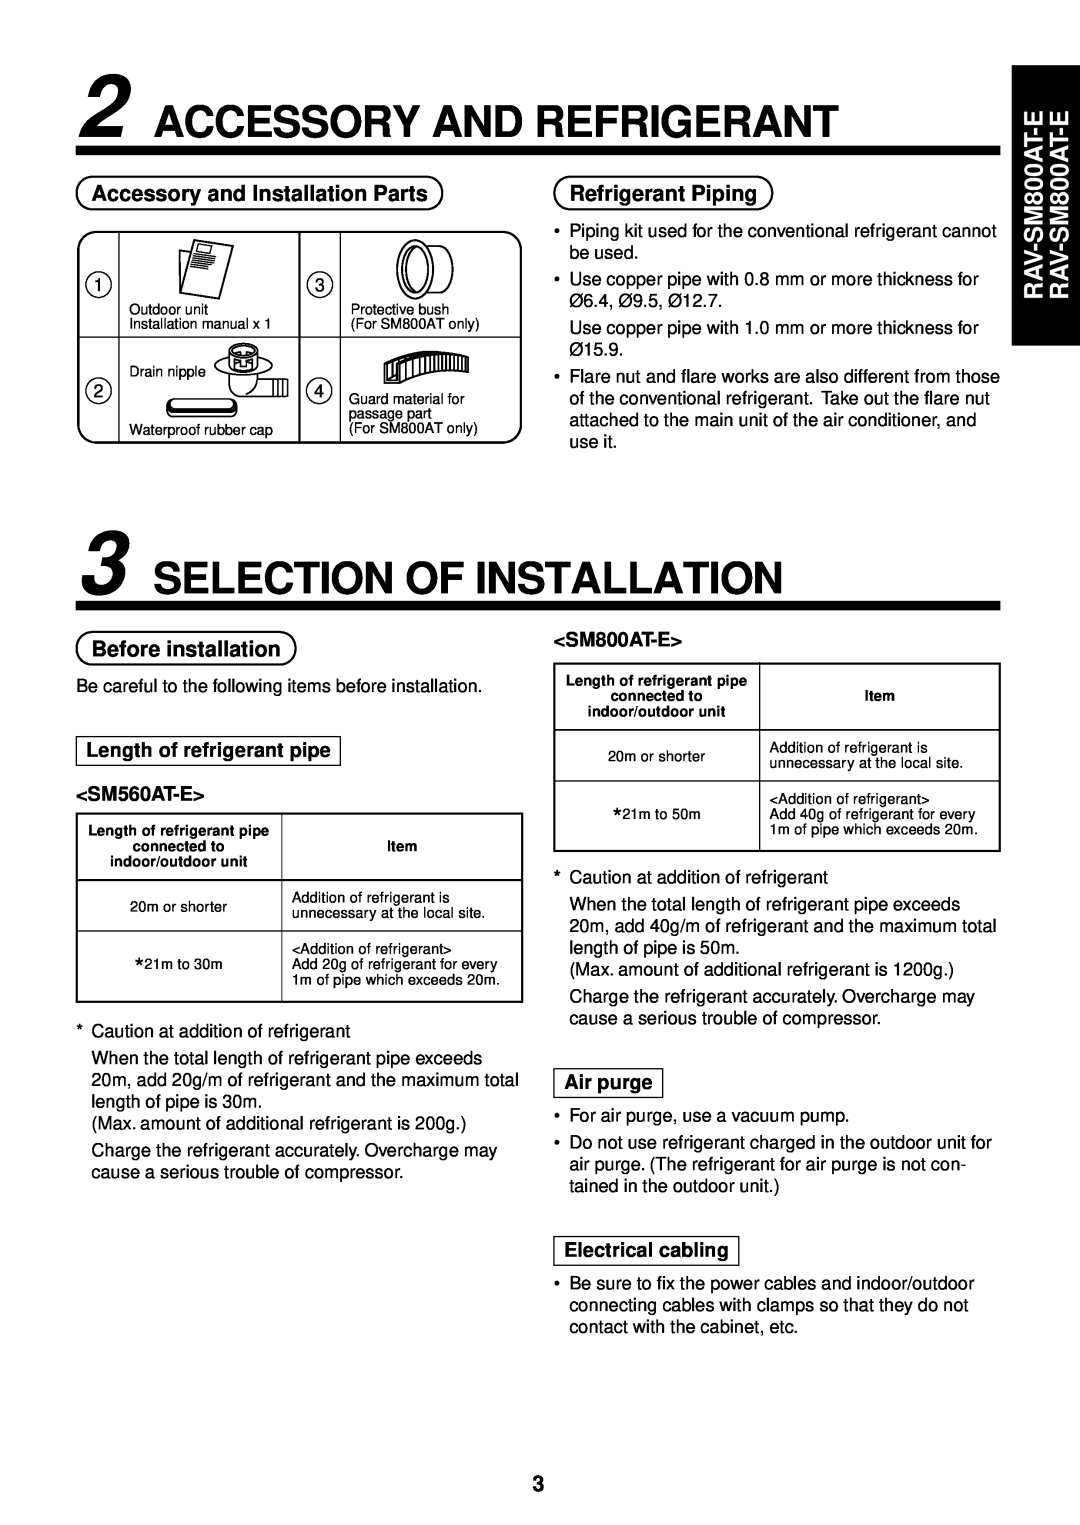 Toshiba RAM-SM560KRT-E Accessory And Refrigerant, Selection Of Installation, E -E, Accessory and Installation Parts 